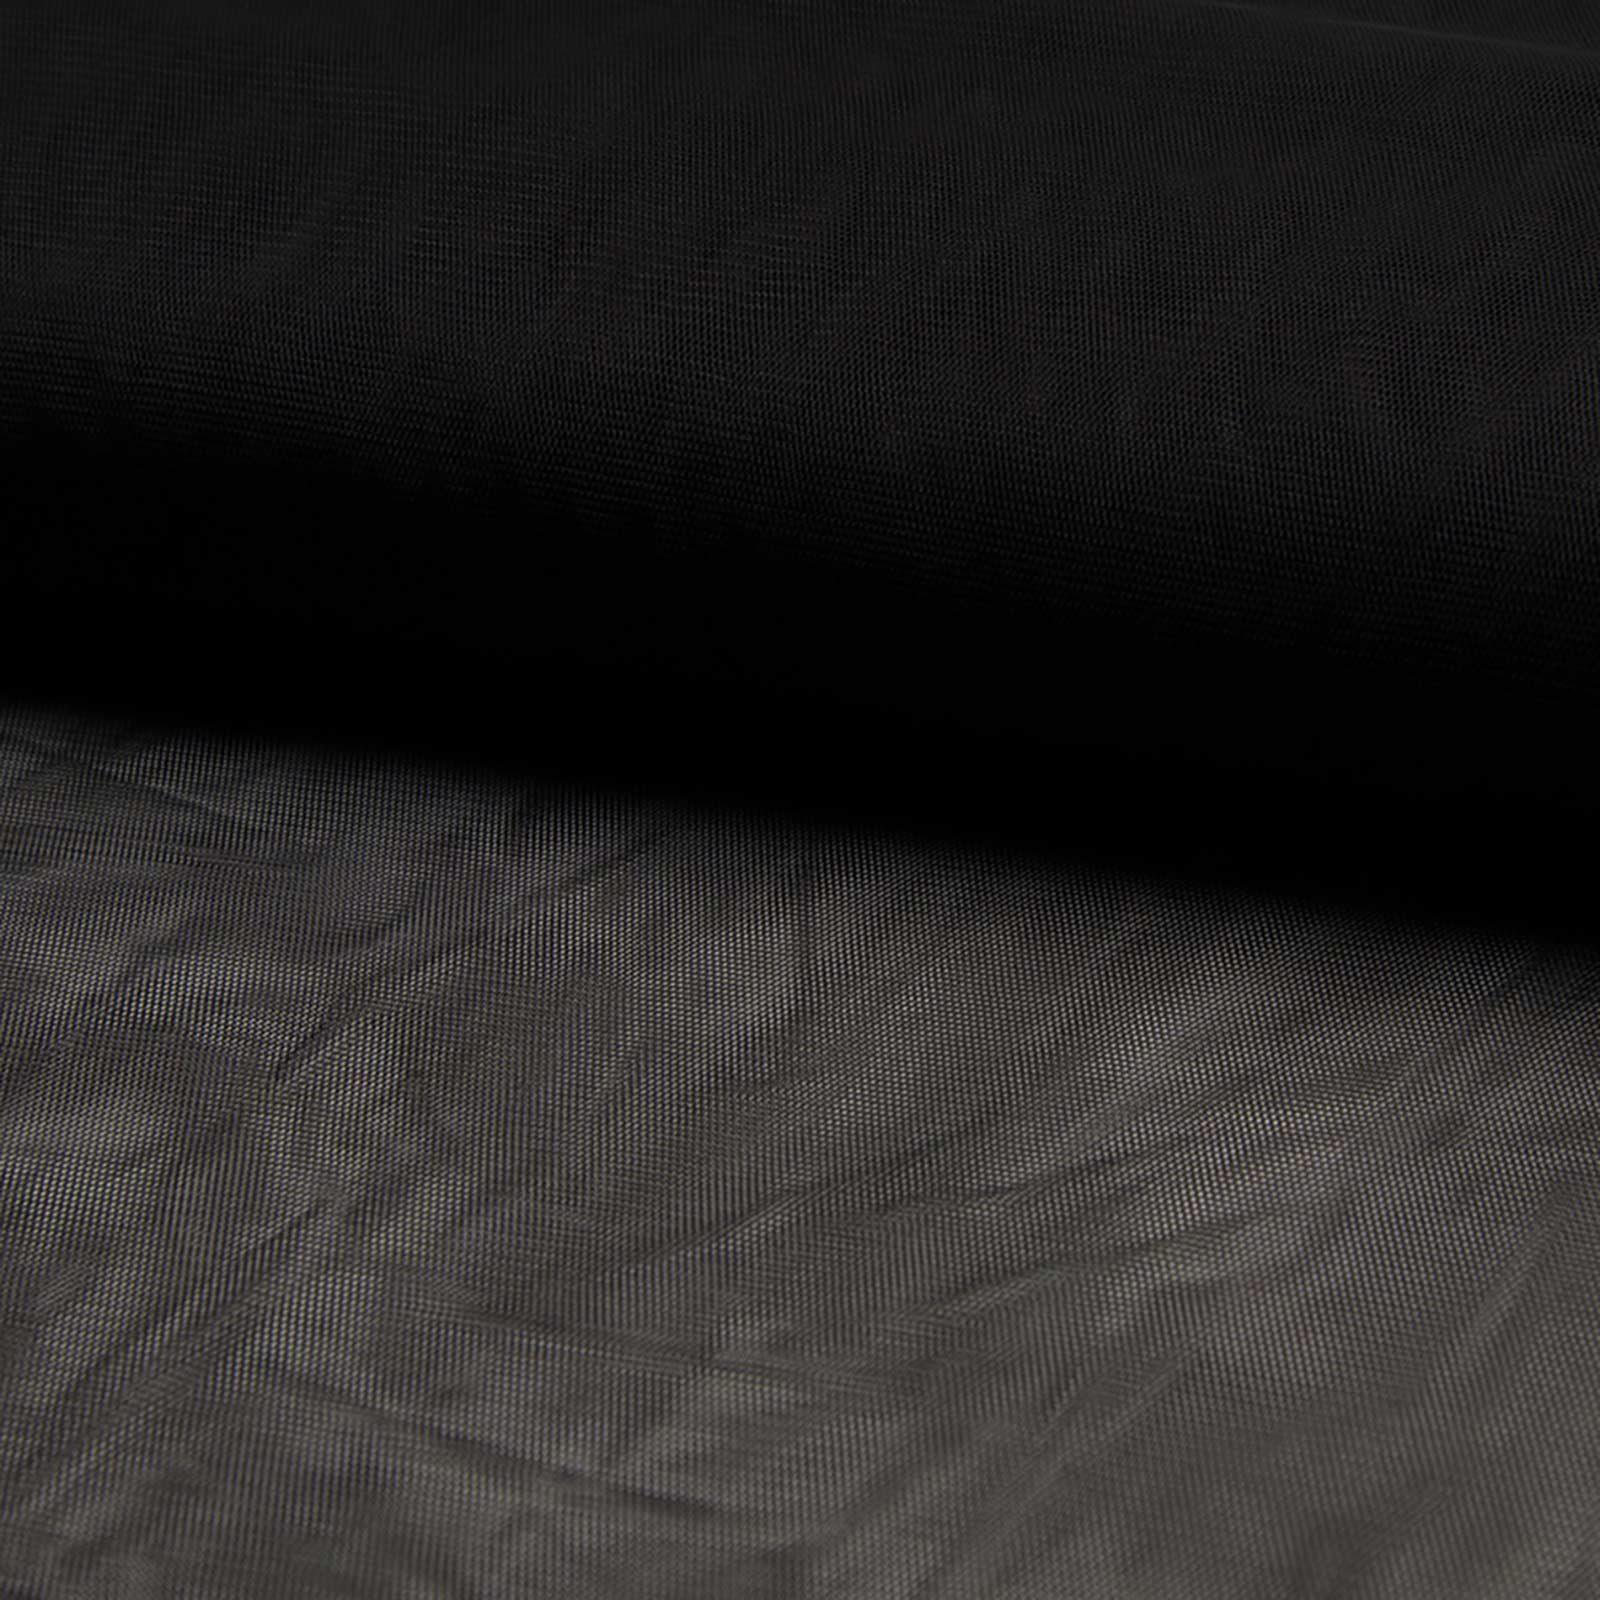 maDDma Stoff Soft-Tüll Kostümstoff Fasching Feintüll 1 x 1,5 m Meterware, schwarz